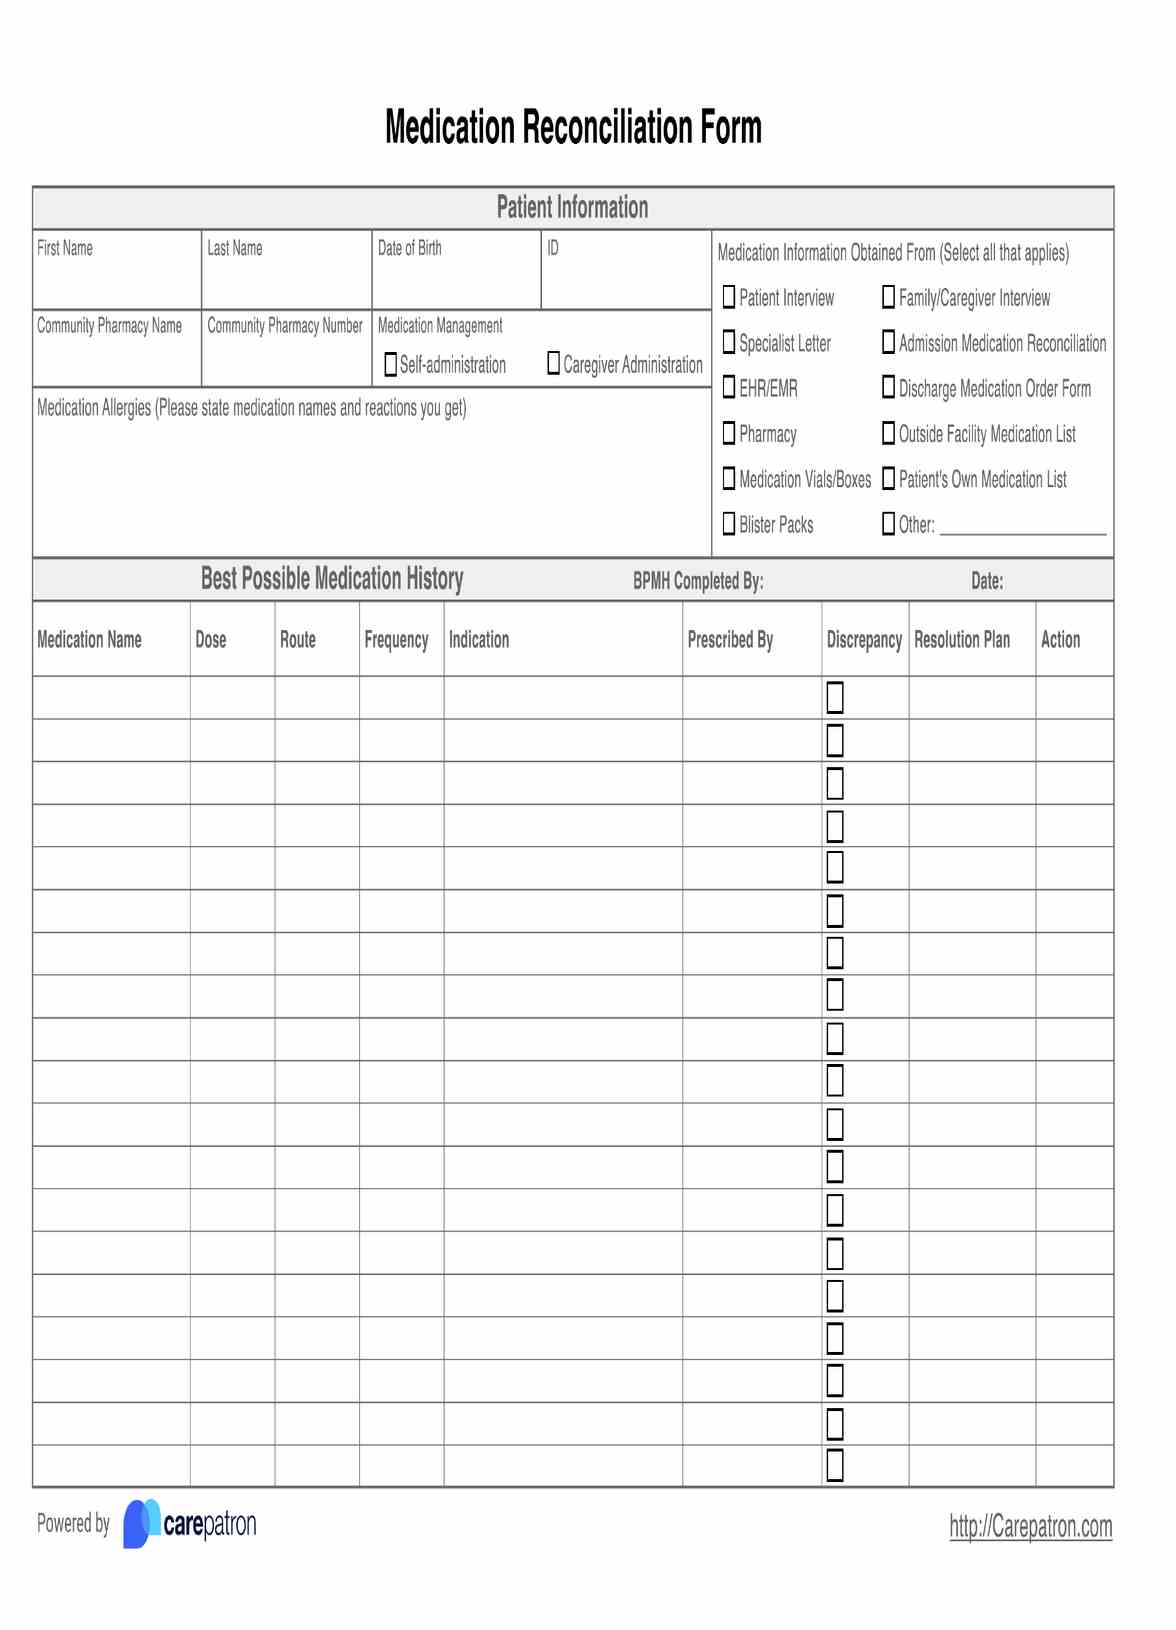 Medication Reconciliation Form PDF Example